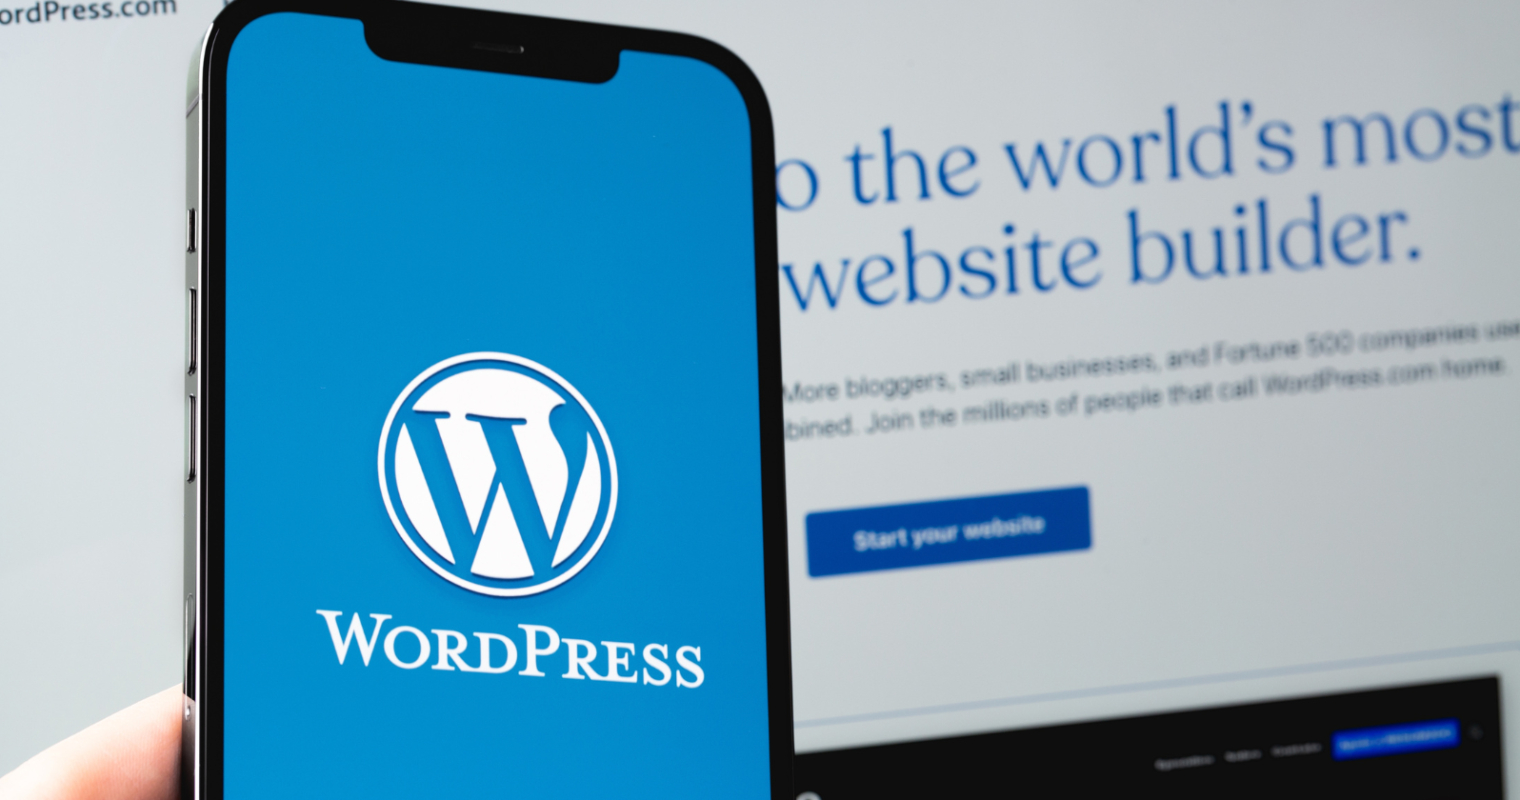  wordpress blog, wordpress site, wordpress vs showit vs squarespace vs wix, 